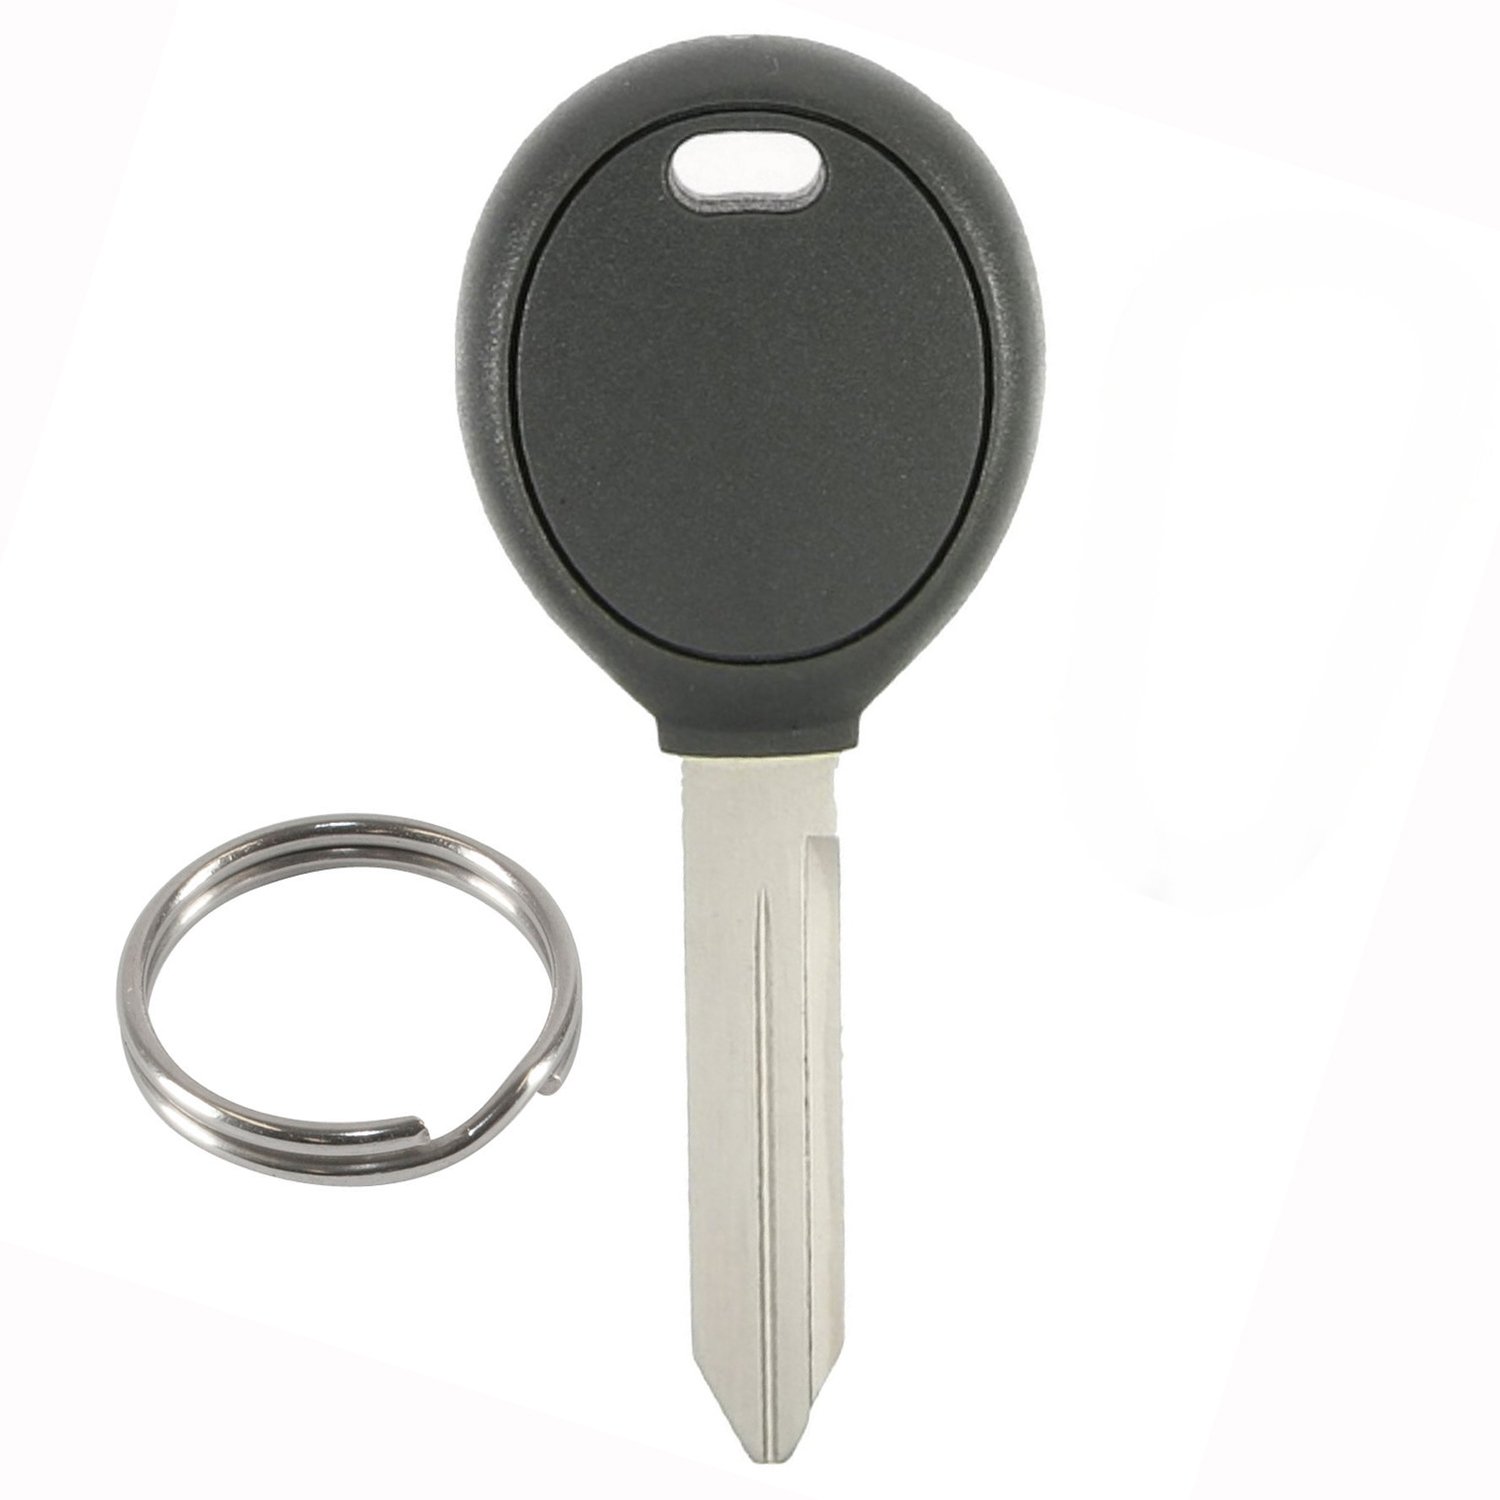 Ri-Key Security New Key For Chrysler Sebring 2009 Y164-PT Transponder Ignition Key Chip ID 46 By Ri-Key Security